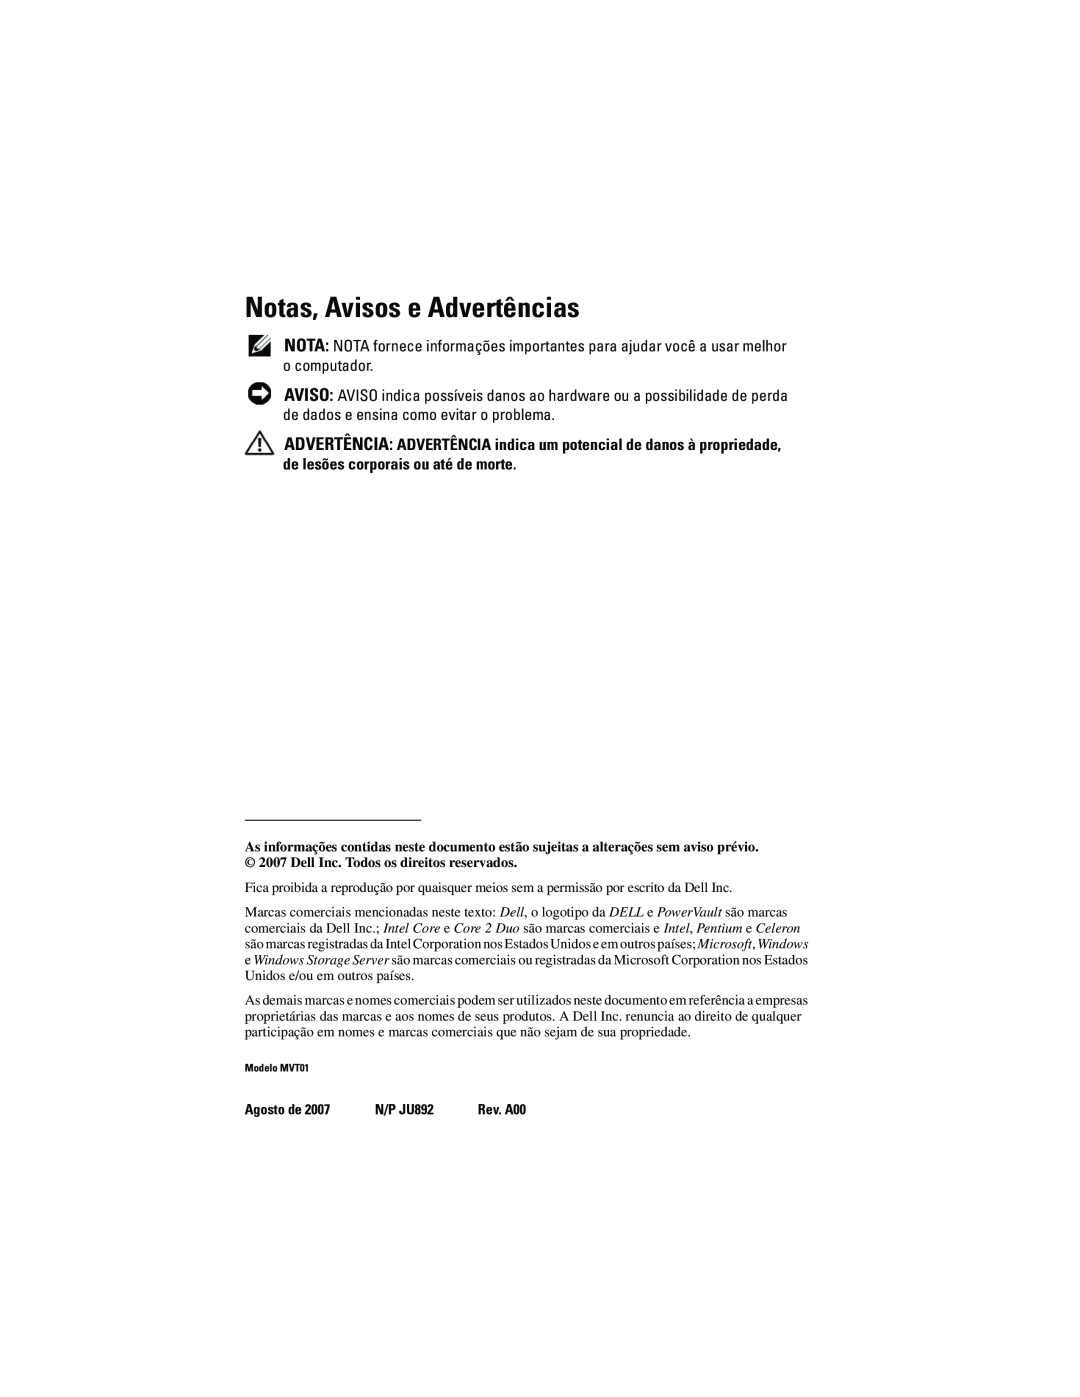 Dell MVT01 manual Notas, Avisos e Advertências, Agosto de, N/P JU892 